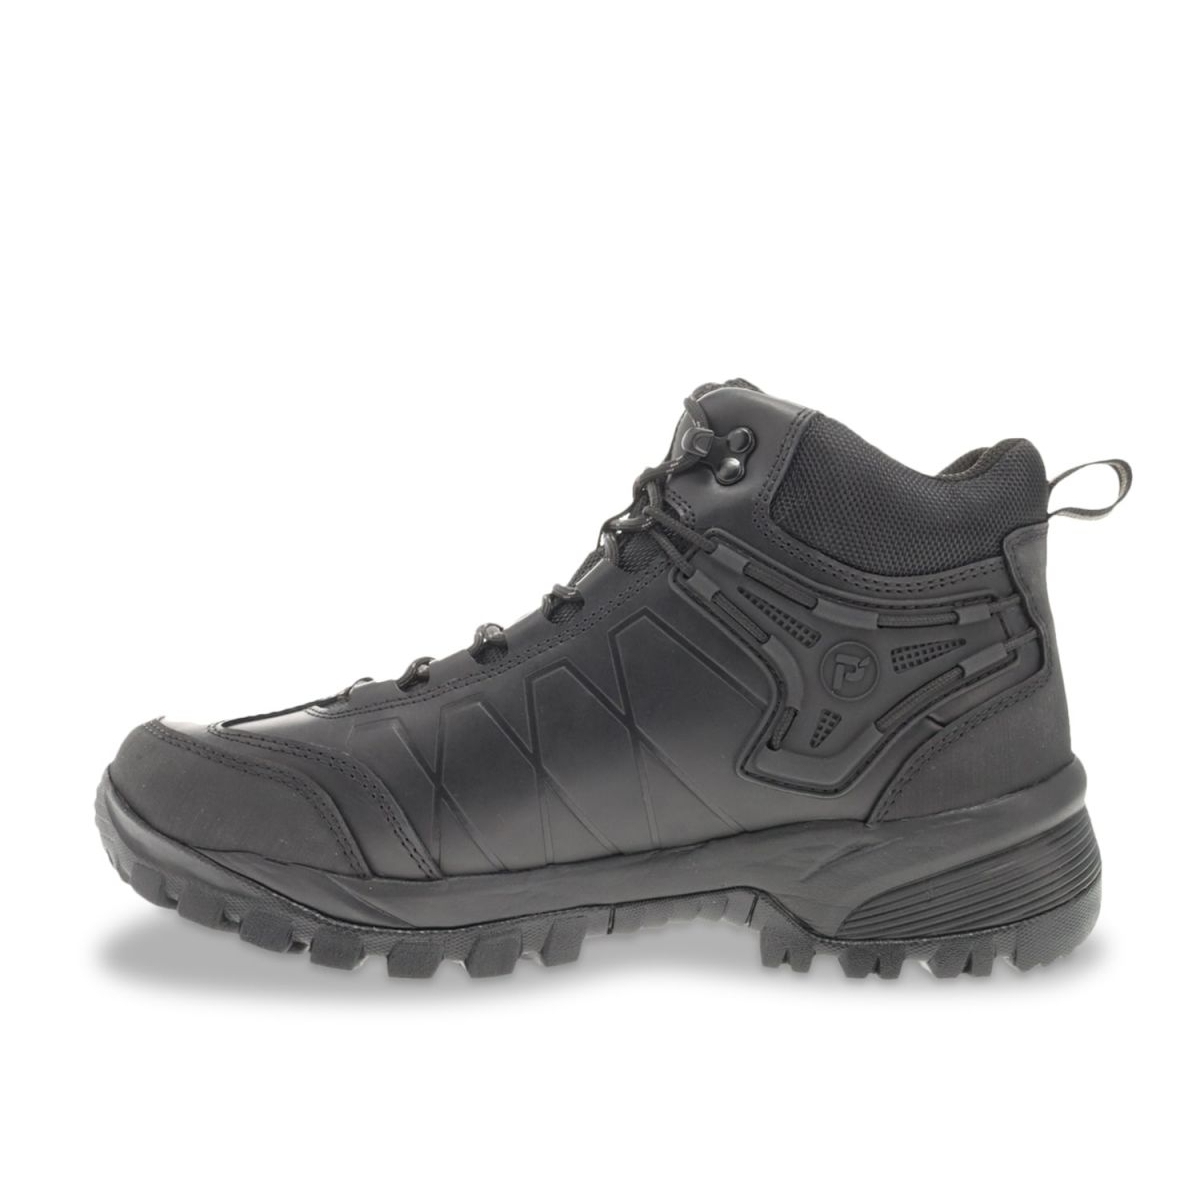 Propet Men's Ridge Walker Force Hiking Boots Black - MBA052LBLK BLACK - BLACK, 10 X-Wide